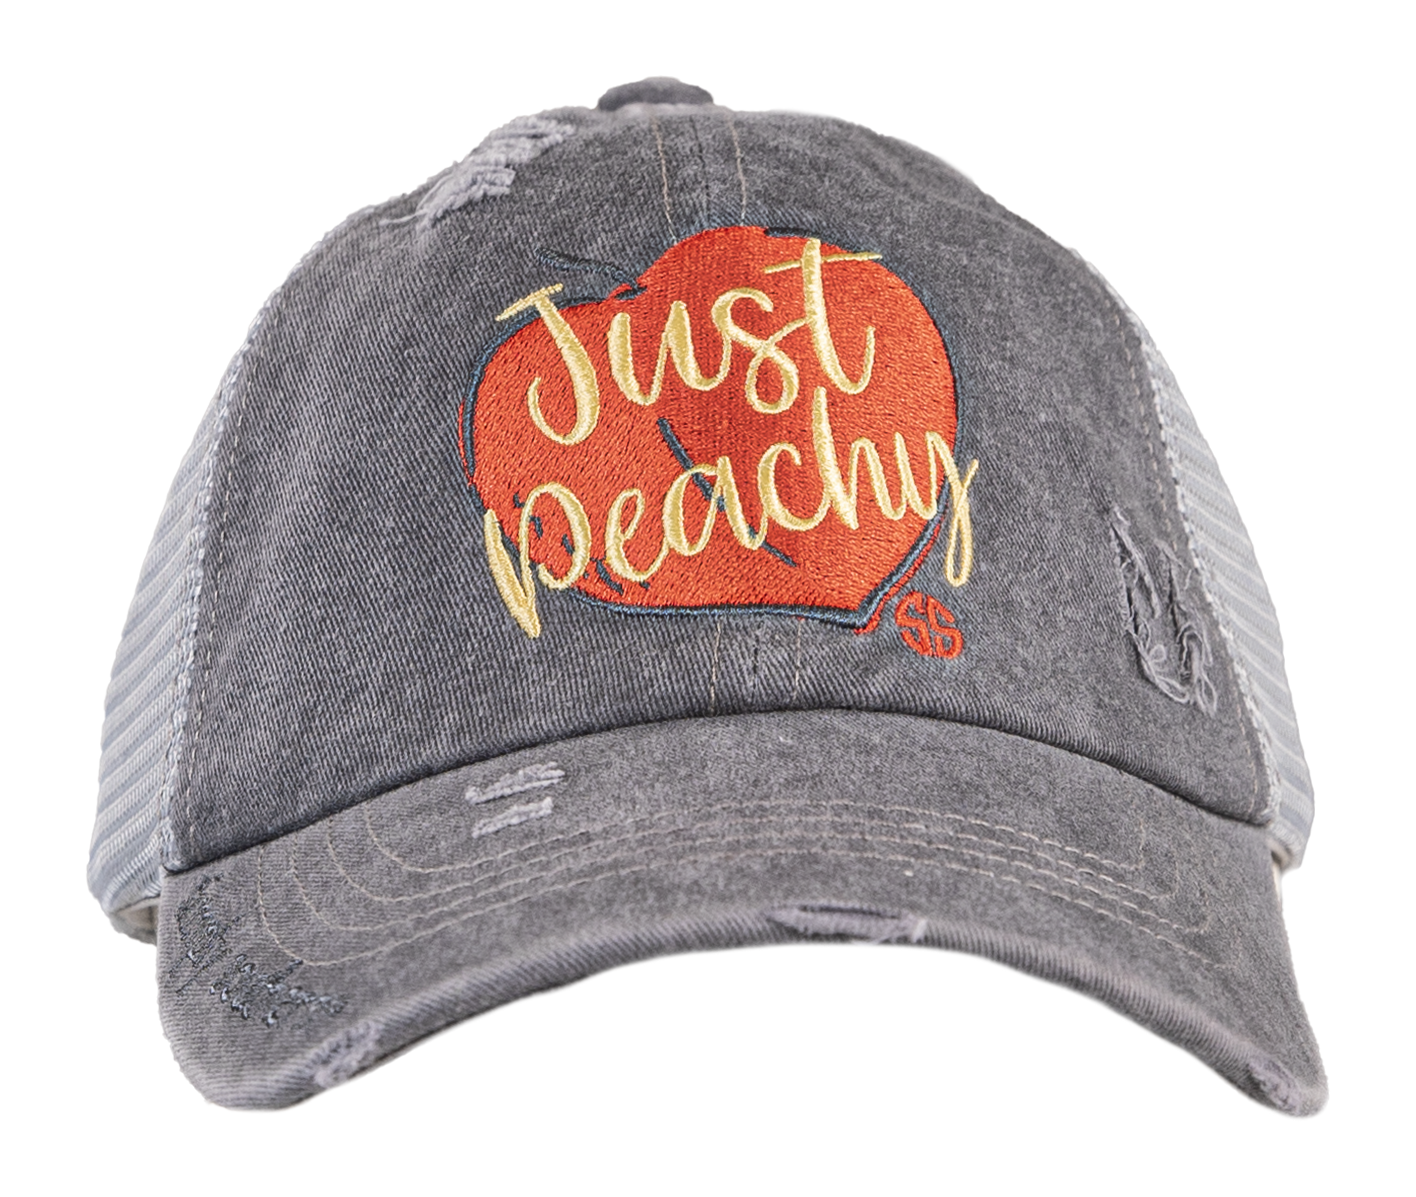 "Just Peachy" Adventure Hat